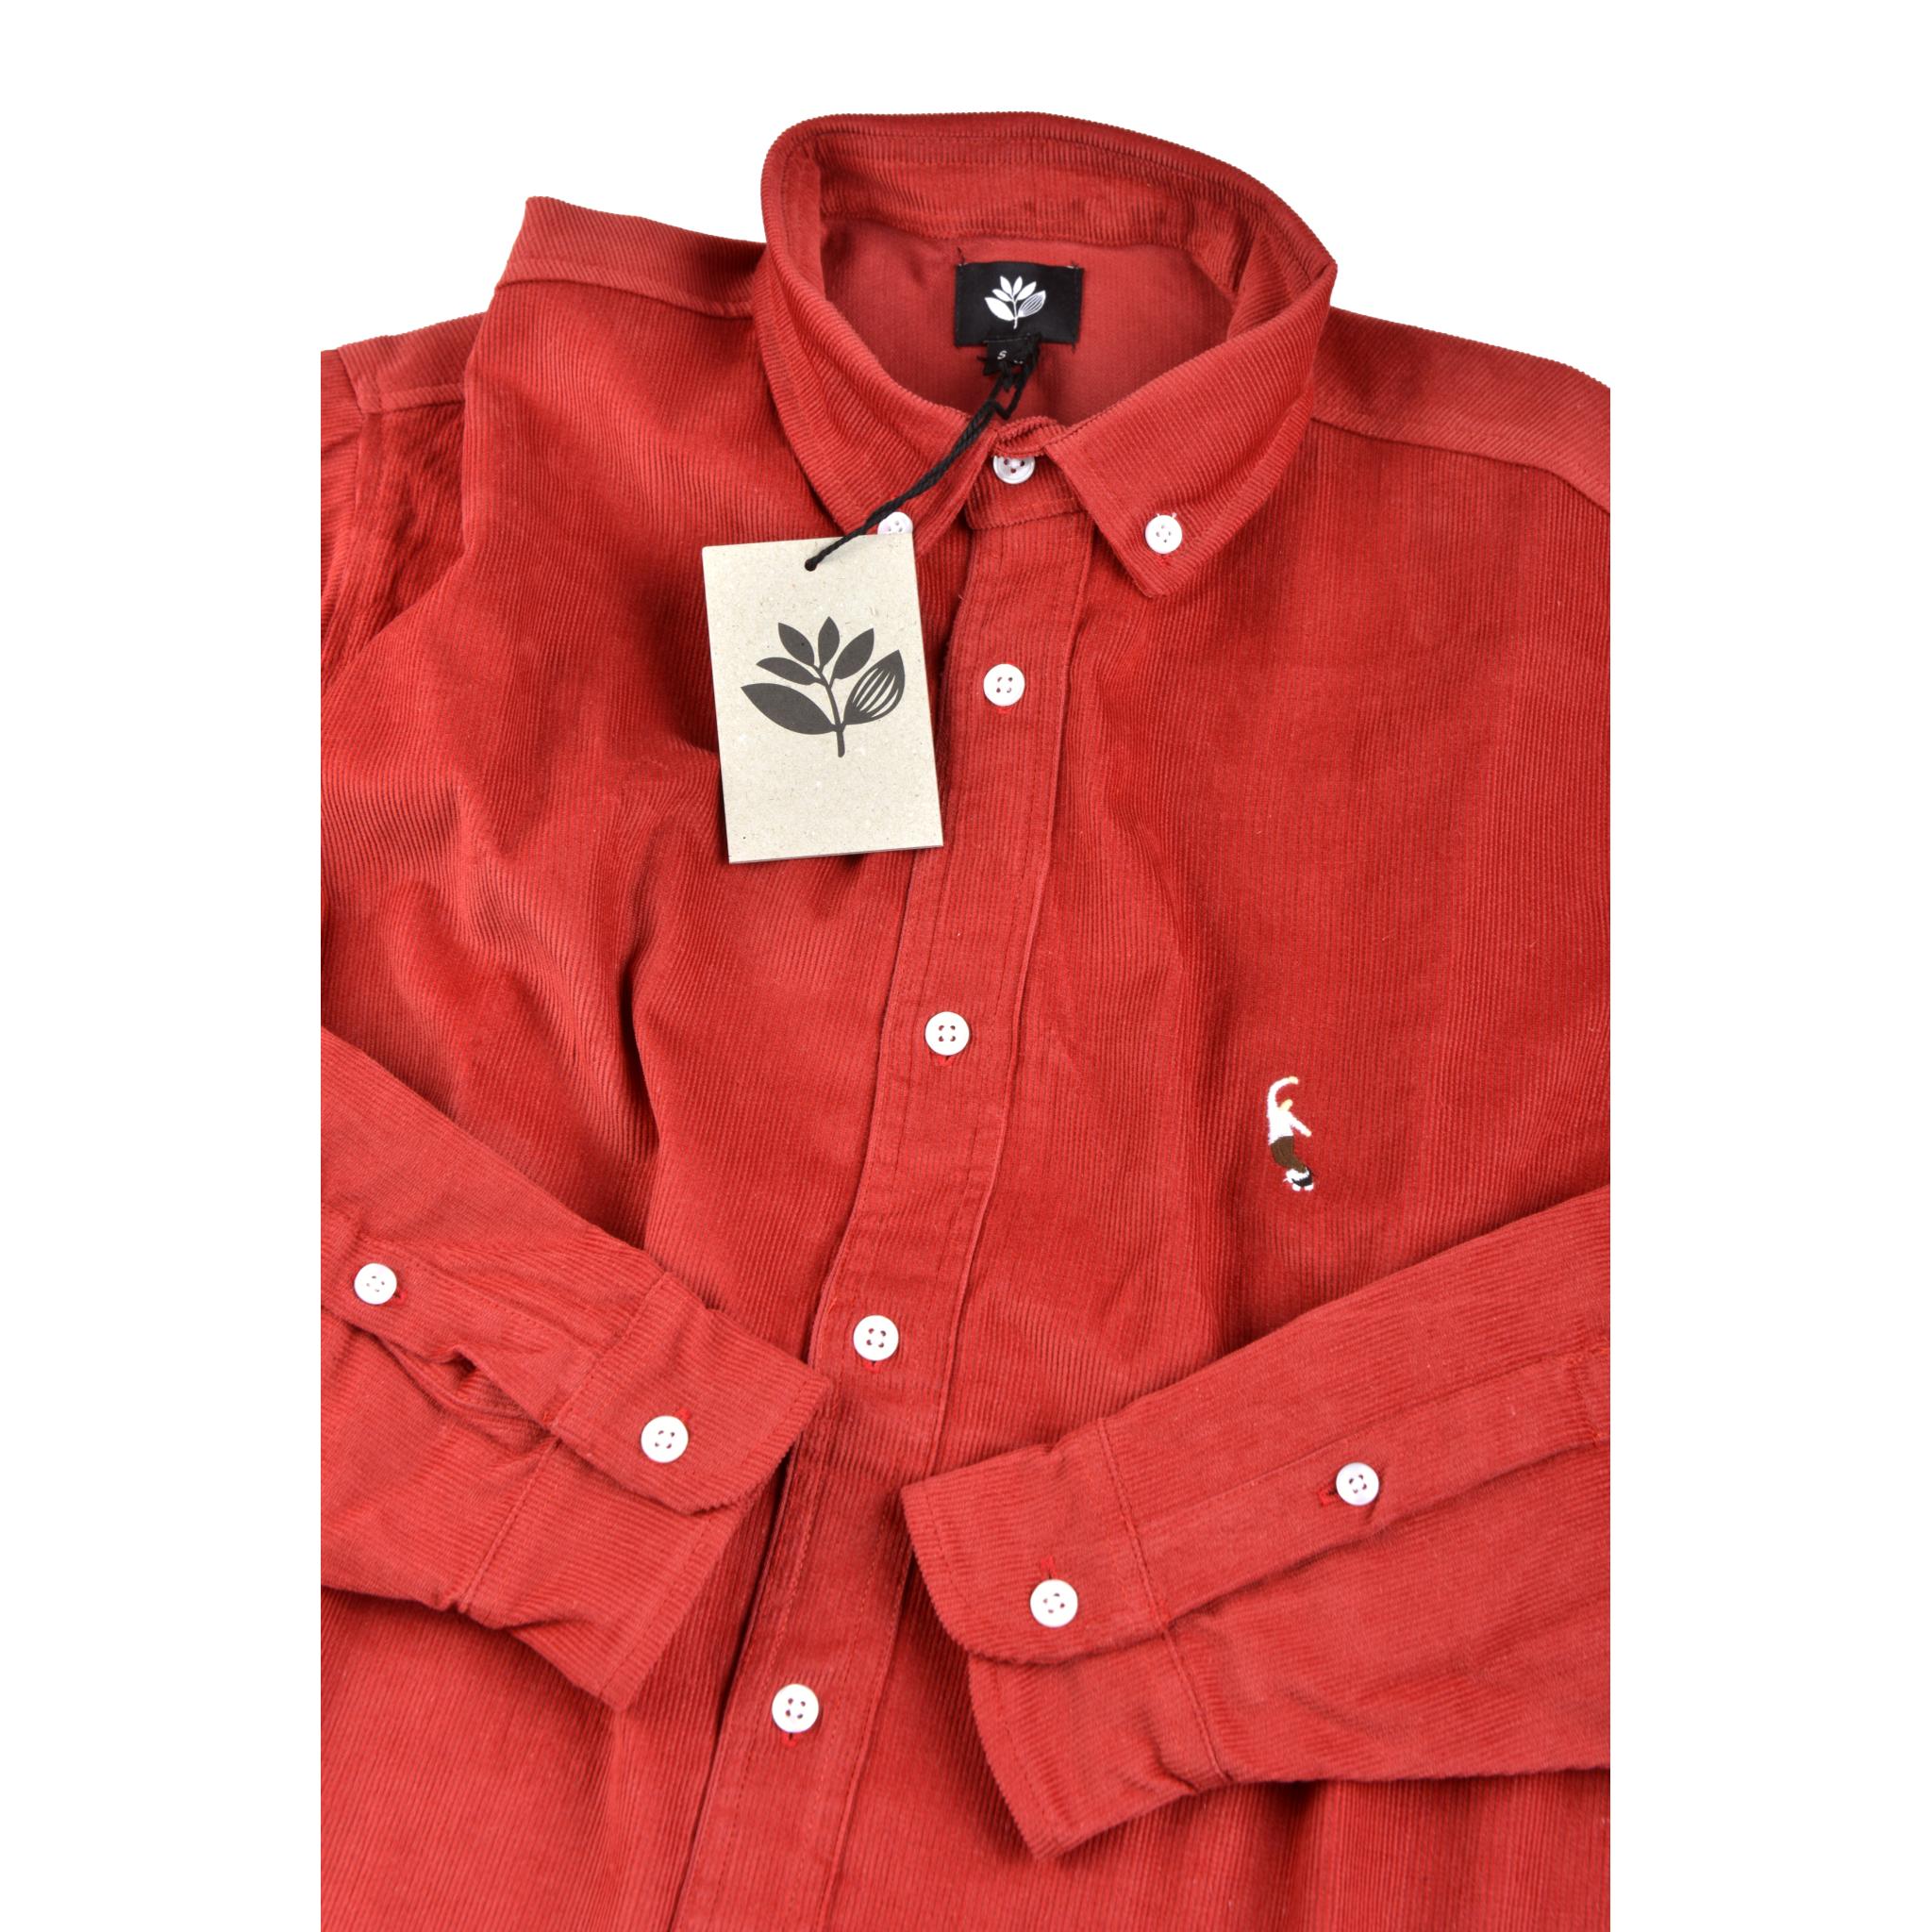 Magenta Pws Shirt Cord Red